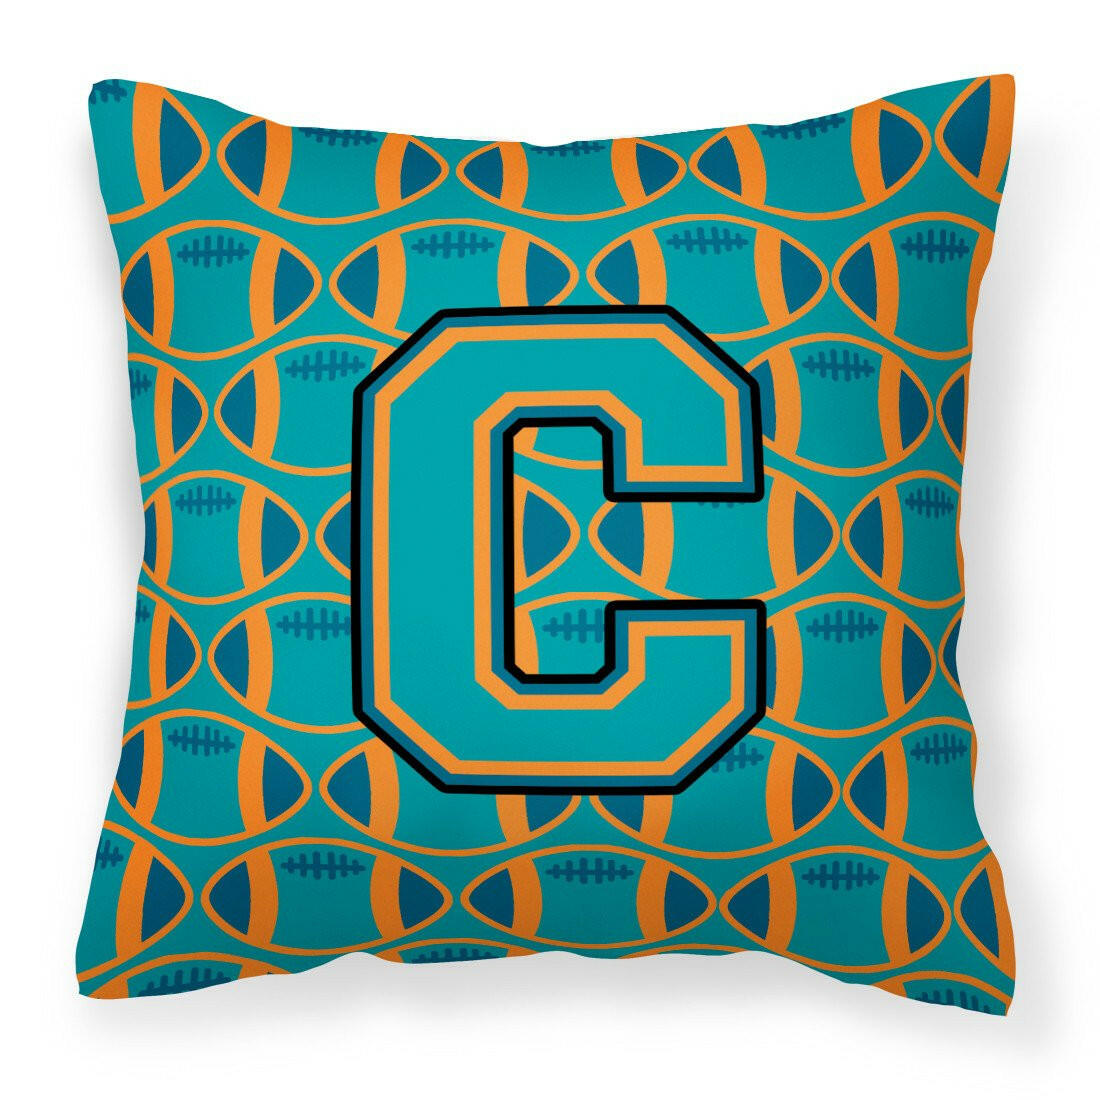 Letter C Football Aqua, Orange and Marine Blue Fabric Decorative Pillow CJ1063-CPW1414 by Caroline's Treasures